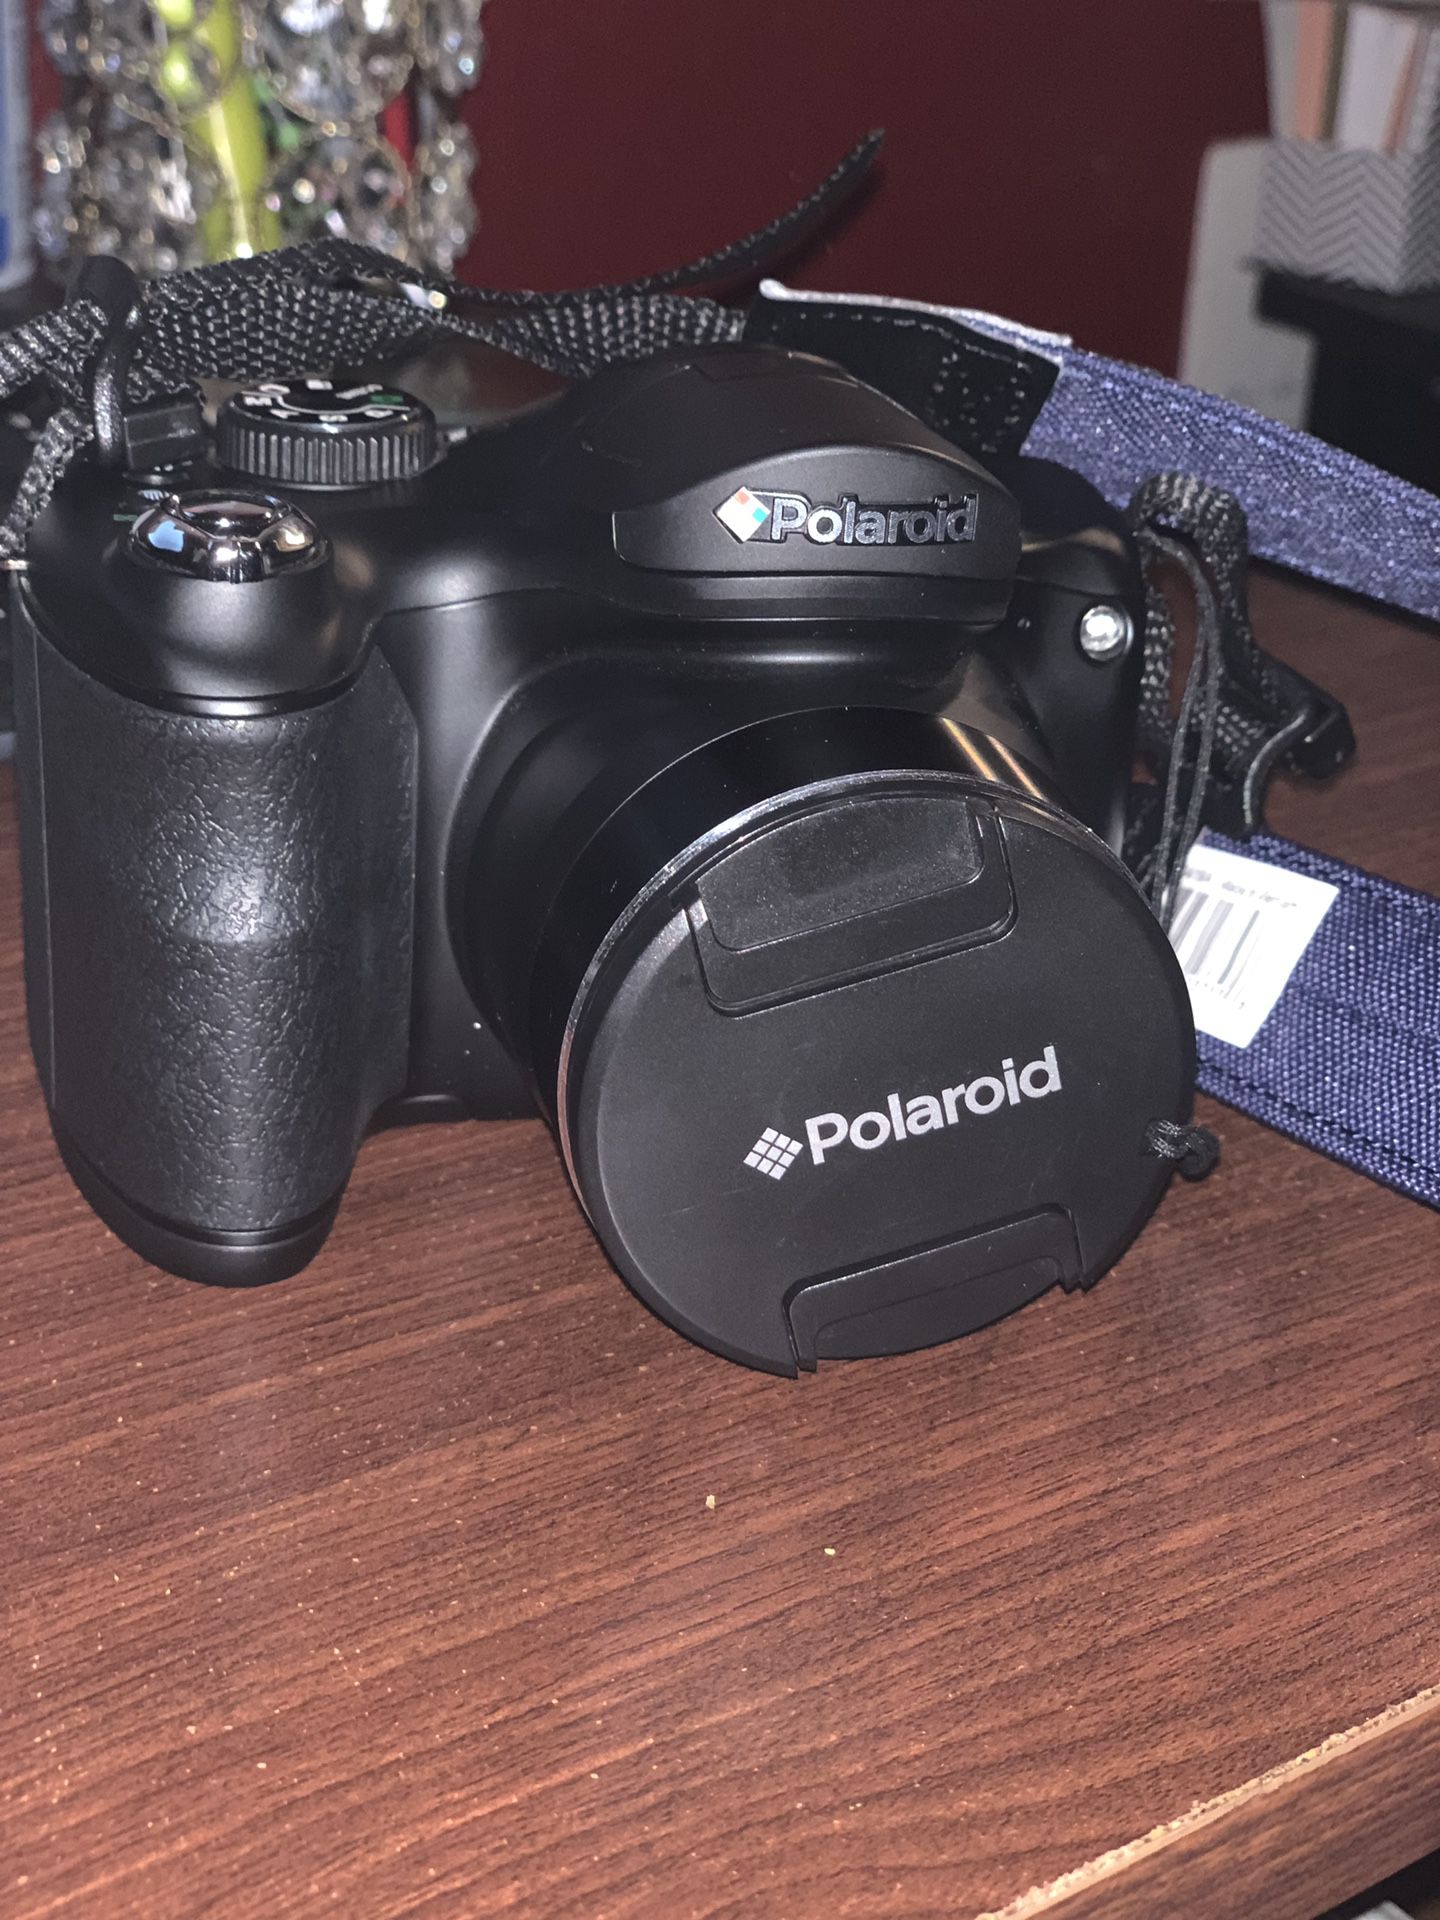 Polaroid Digital camera with WiFi